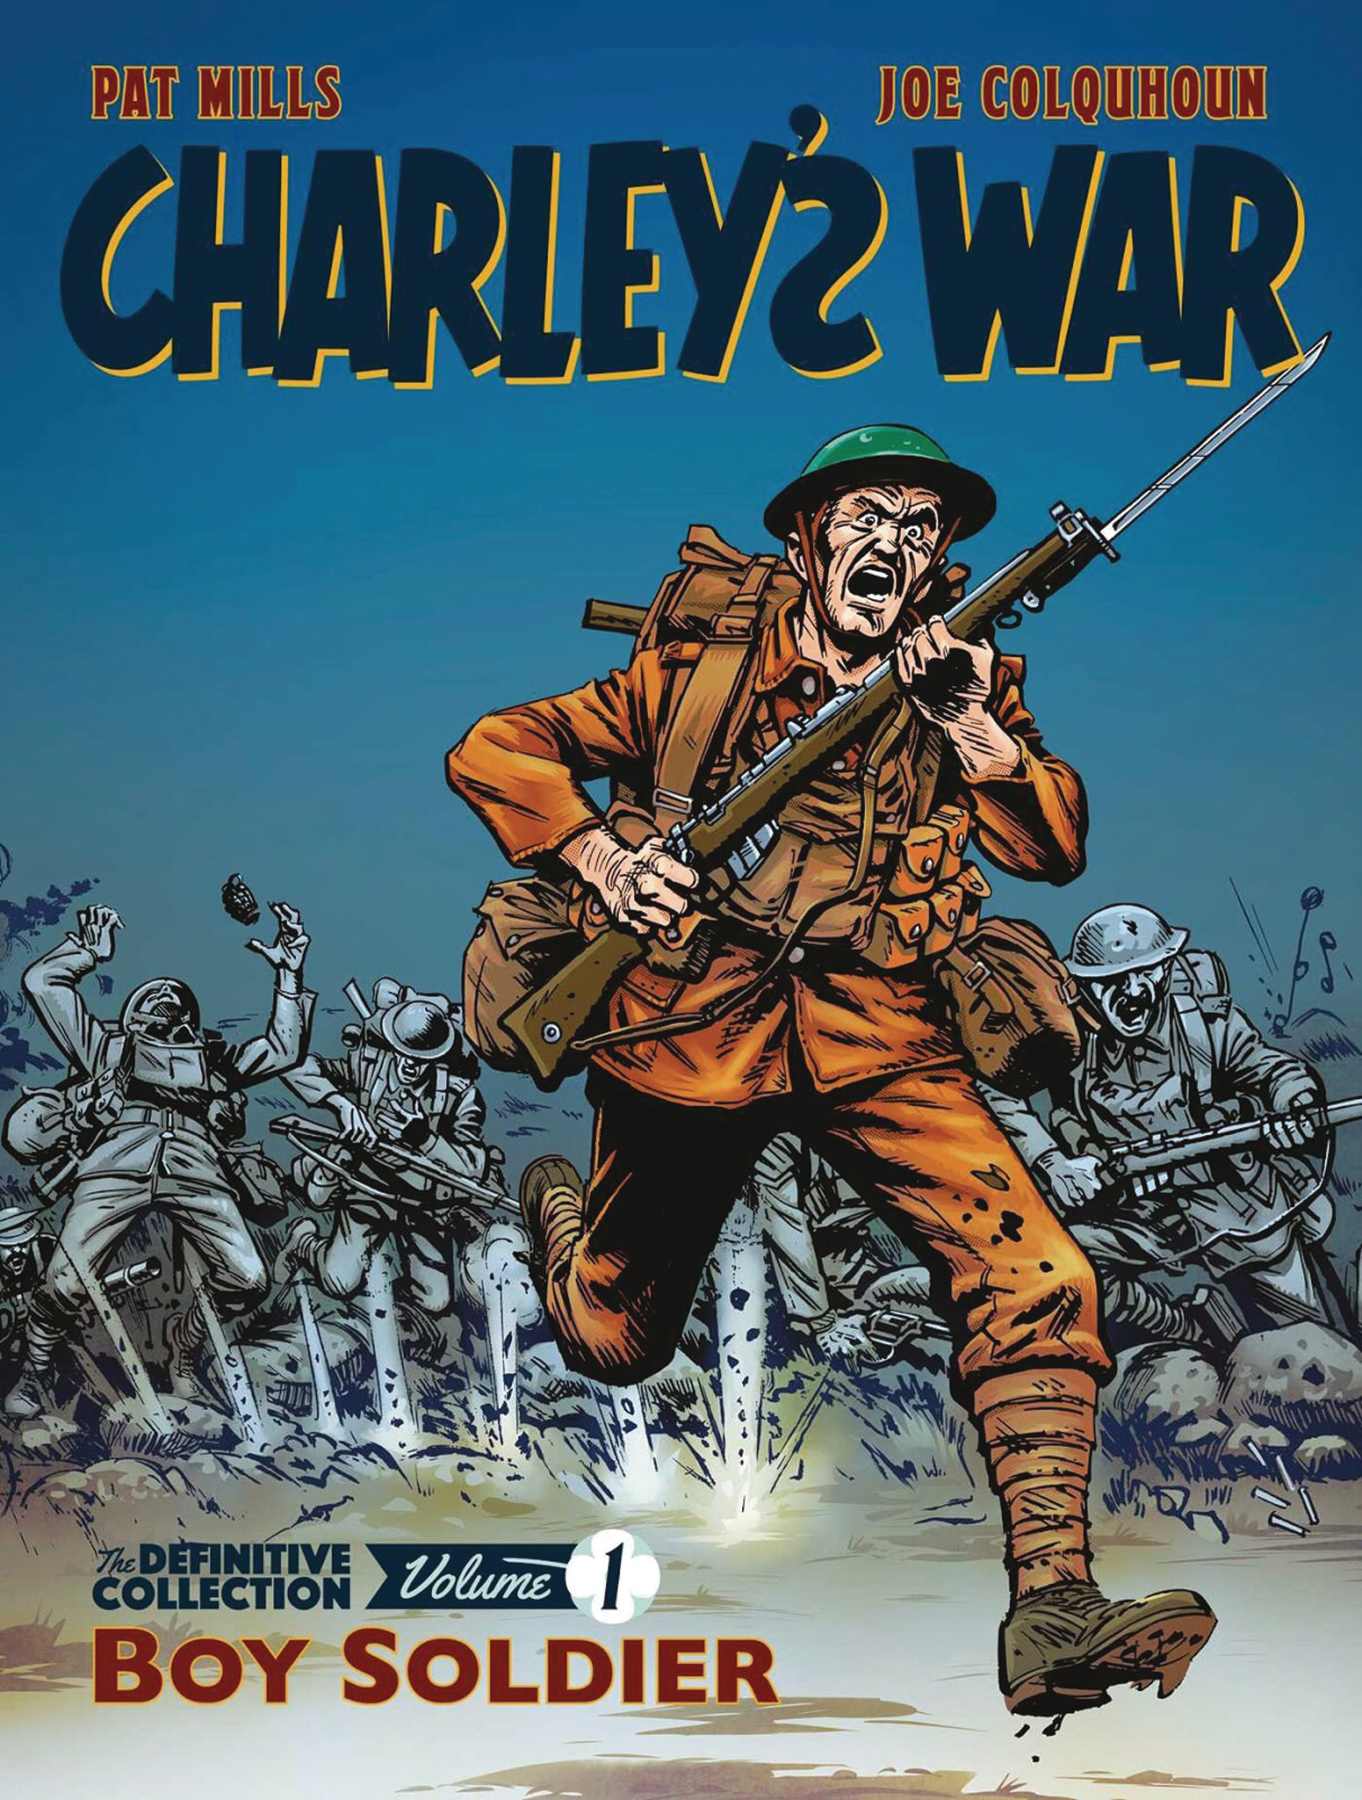 CHARLEYS WAR DEFINITVE COLL TP VOL 01 BOY SOLDIER